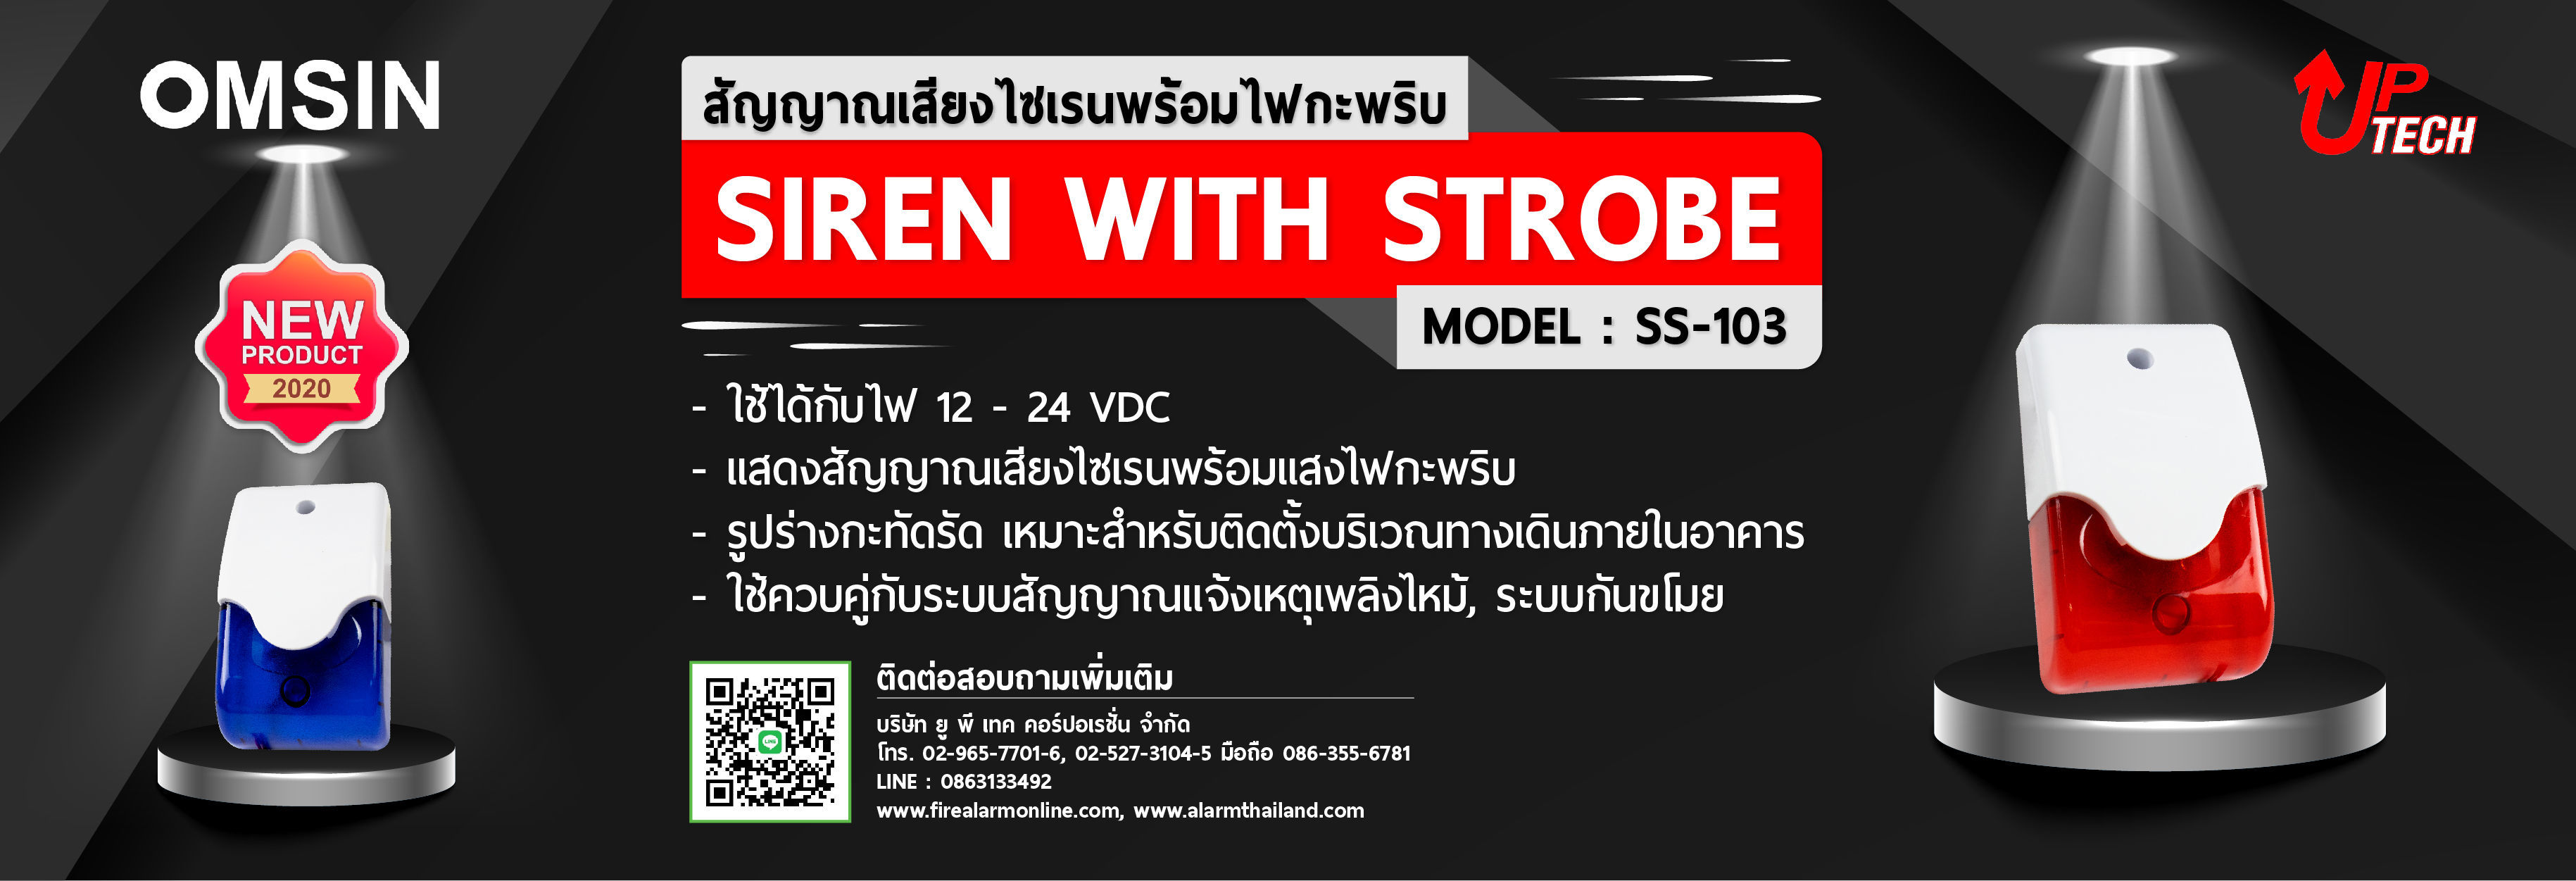 SS-103 Siren With Strobe ไซเรน สัญญาณเสียงไซเรนพร้อมไฟกะพริบ New Product